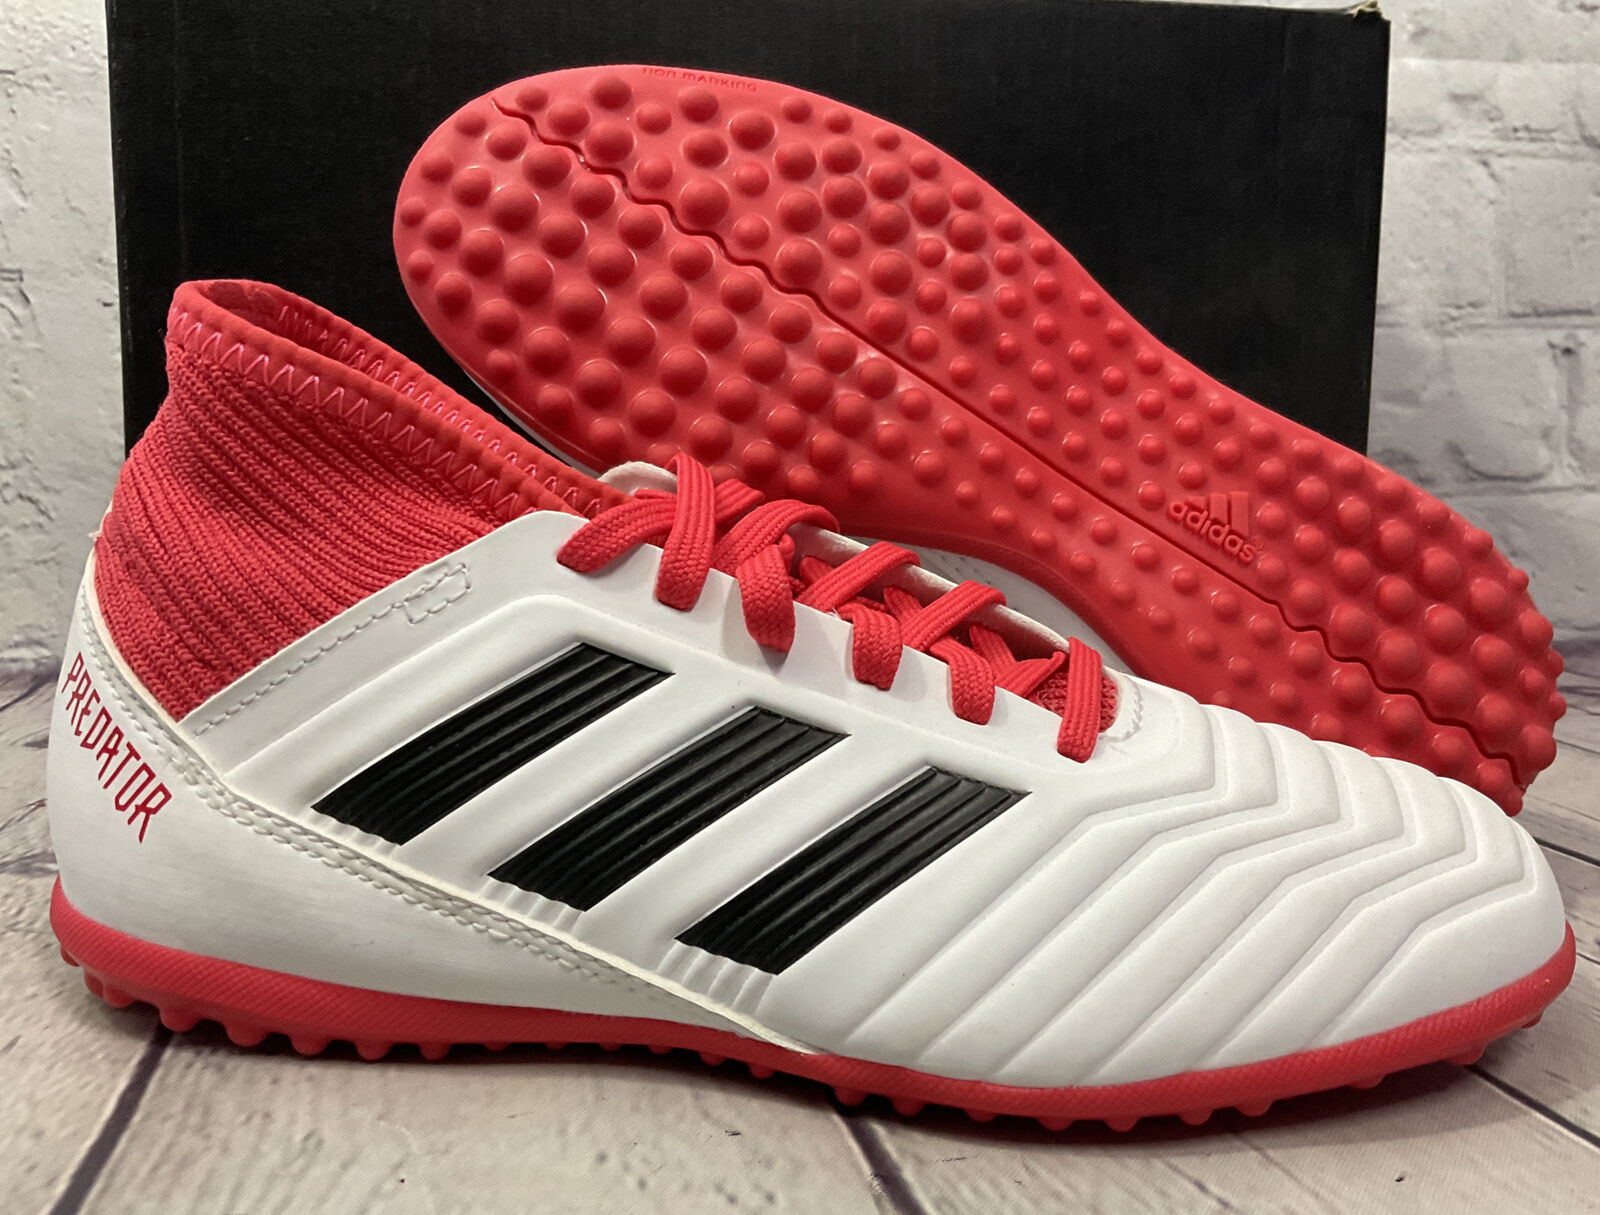 Adidas Youth Predator Tango 18.3 Soccer Shoes Size Black/White New With Box | eBay